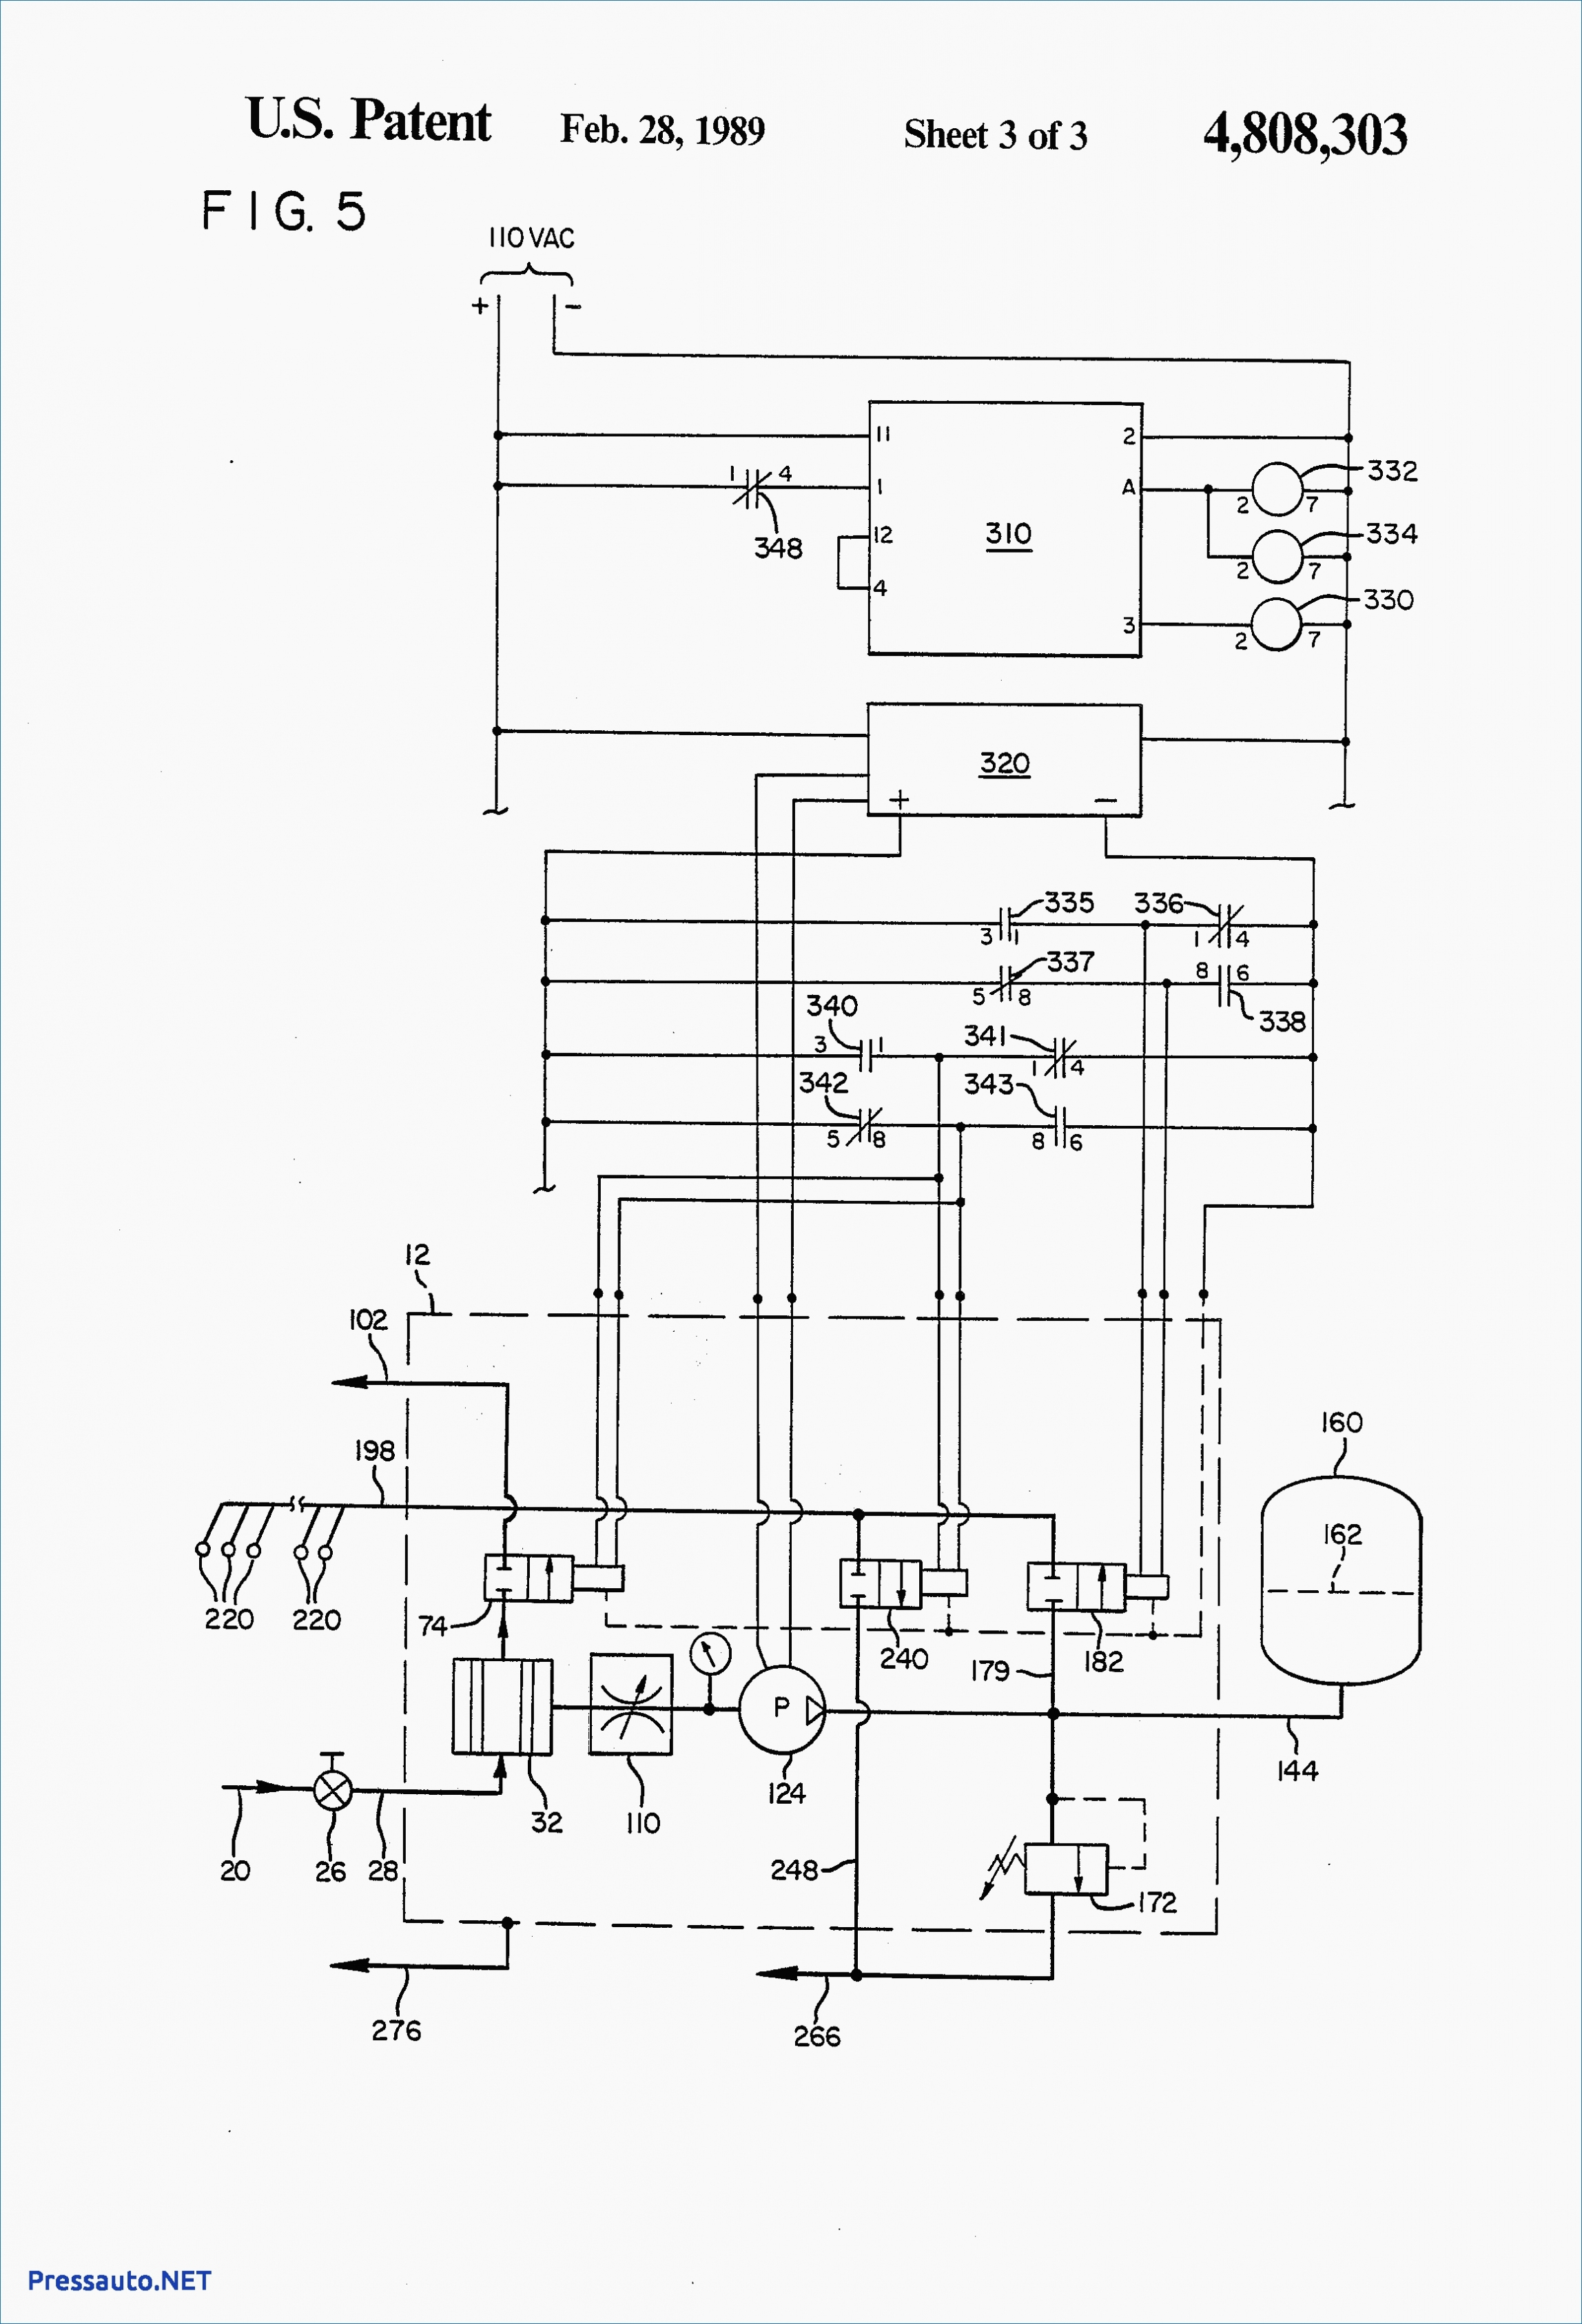 Hayward Super Pump Wiring Diagram Free Download | Wiring Library - Hayward Super Pump Wiring Diagram 115V